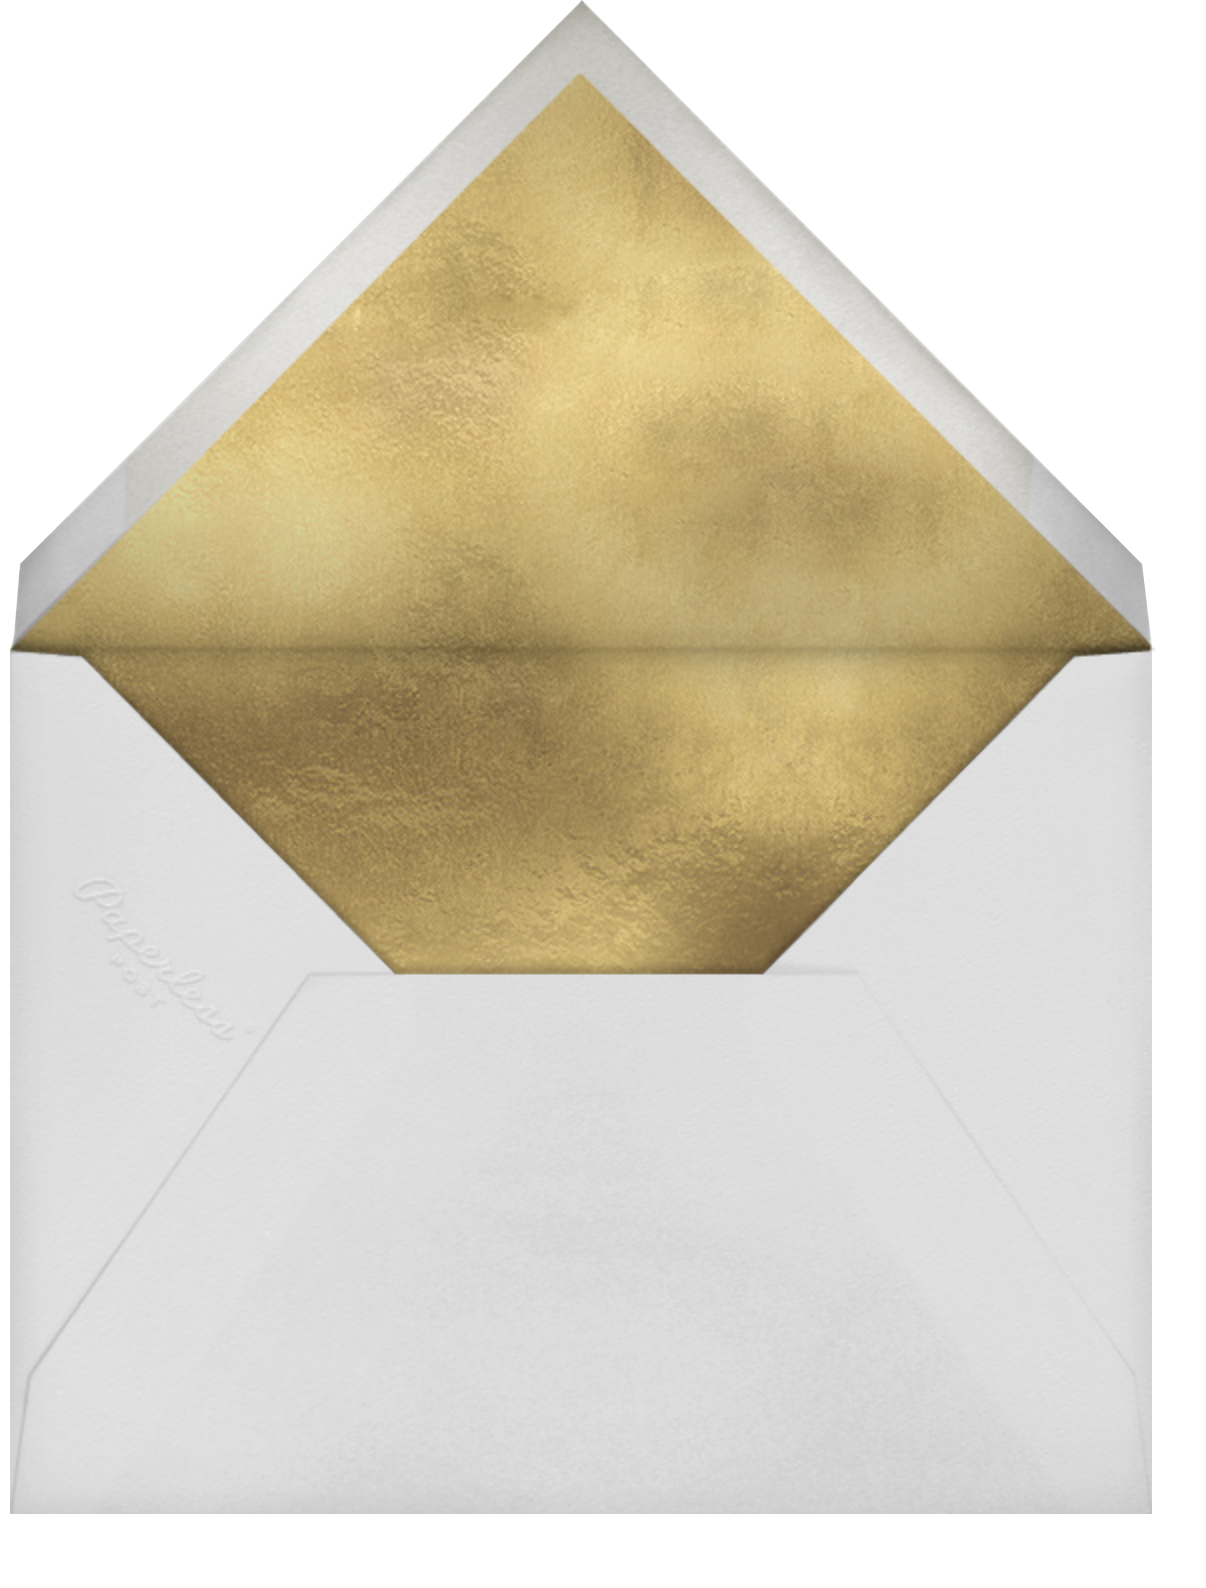 Adored (Invitation) - Paperless Post - Envelope